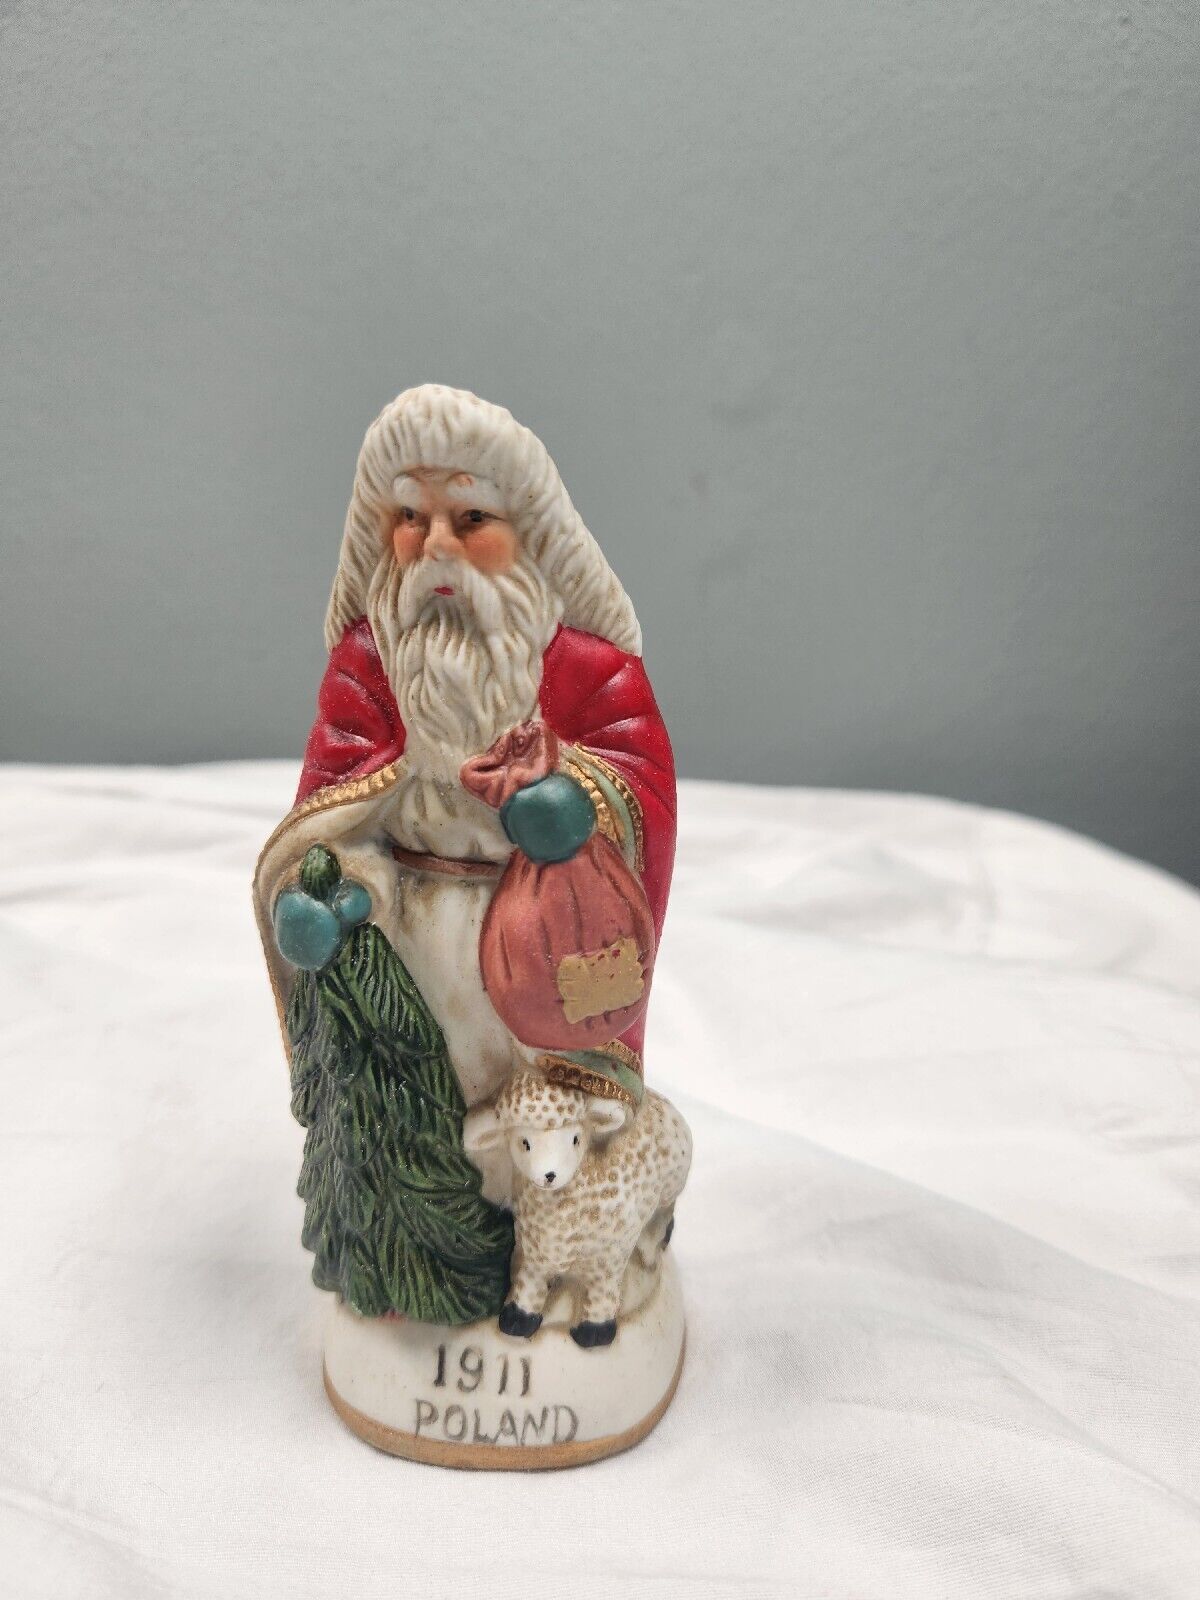 Vintage Christmas Figurine “Memories of Santa” Poland 1911 Santa.